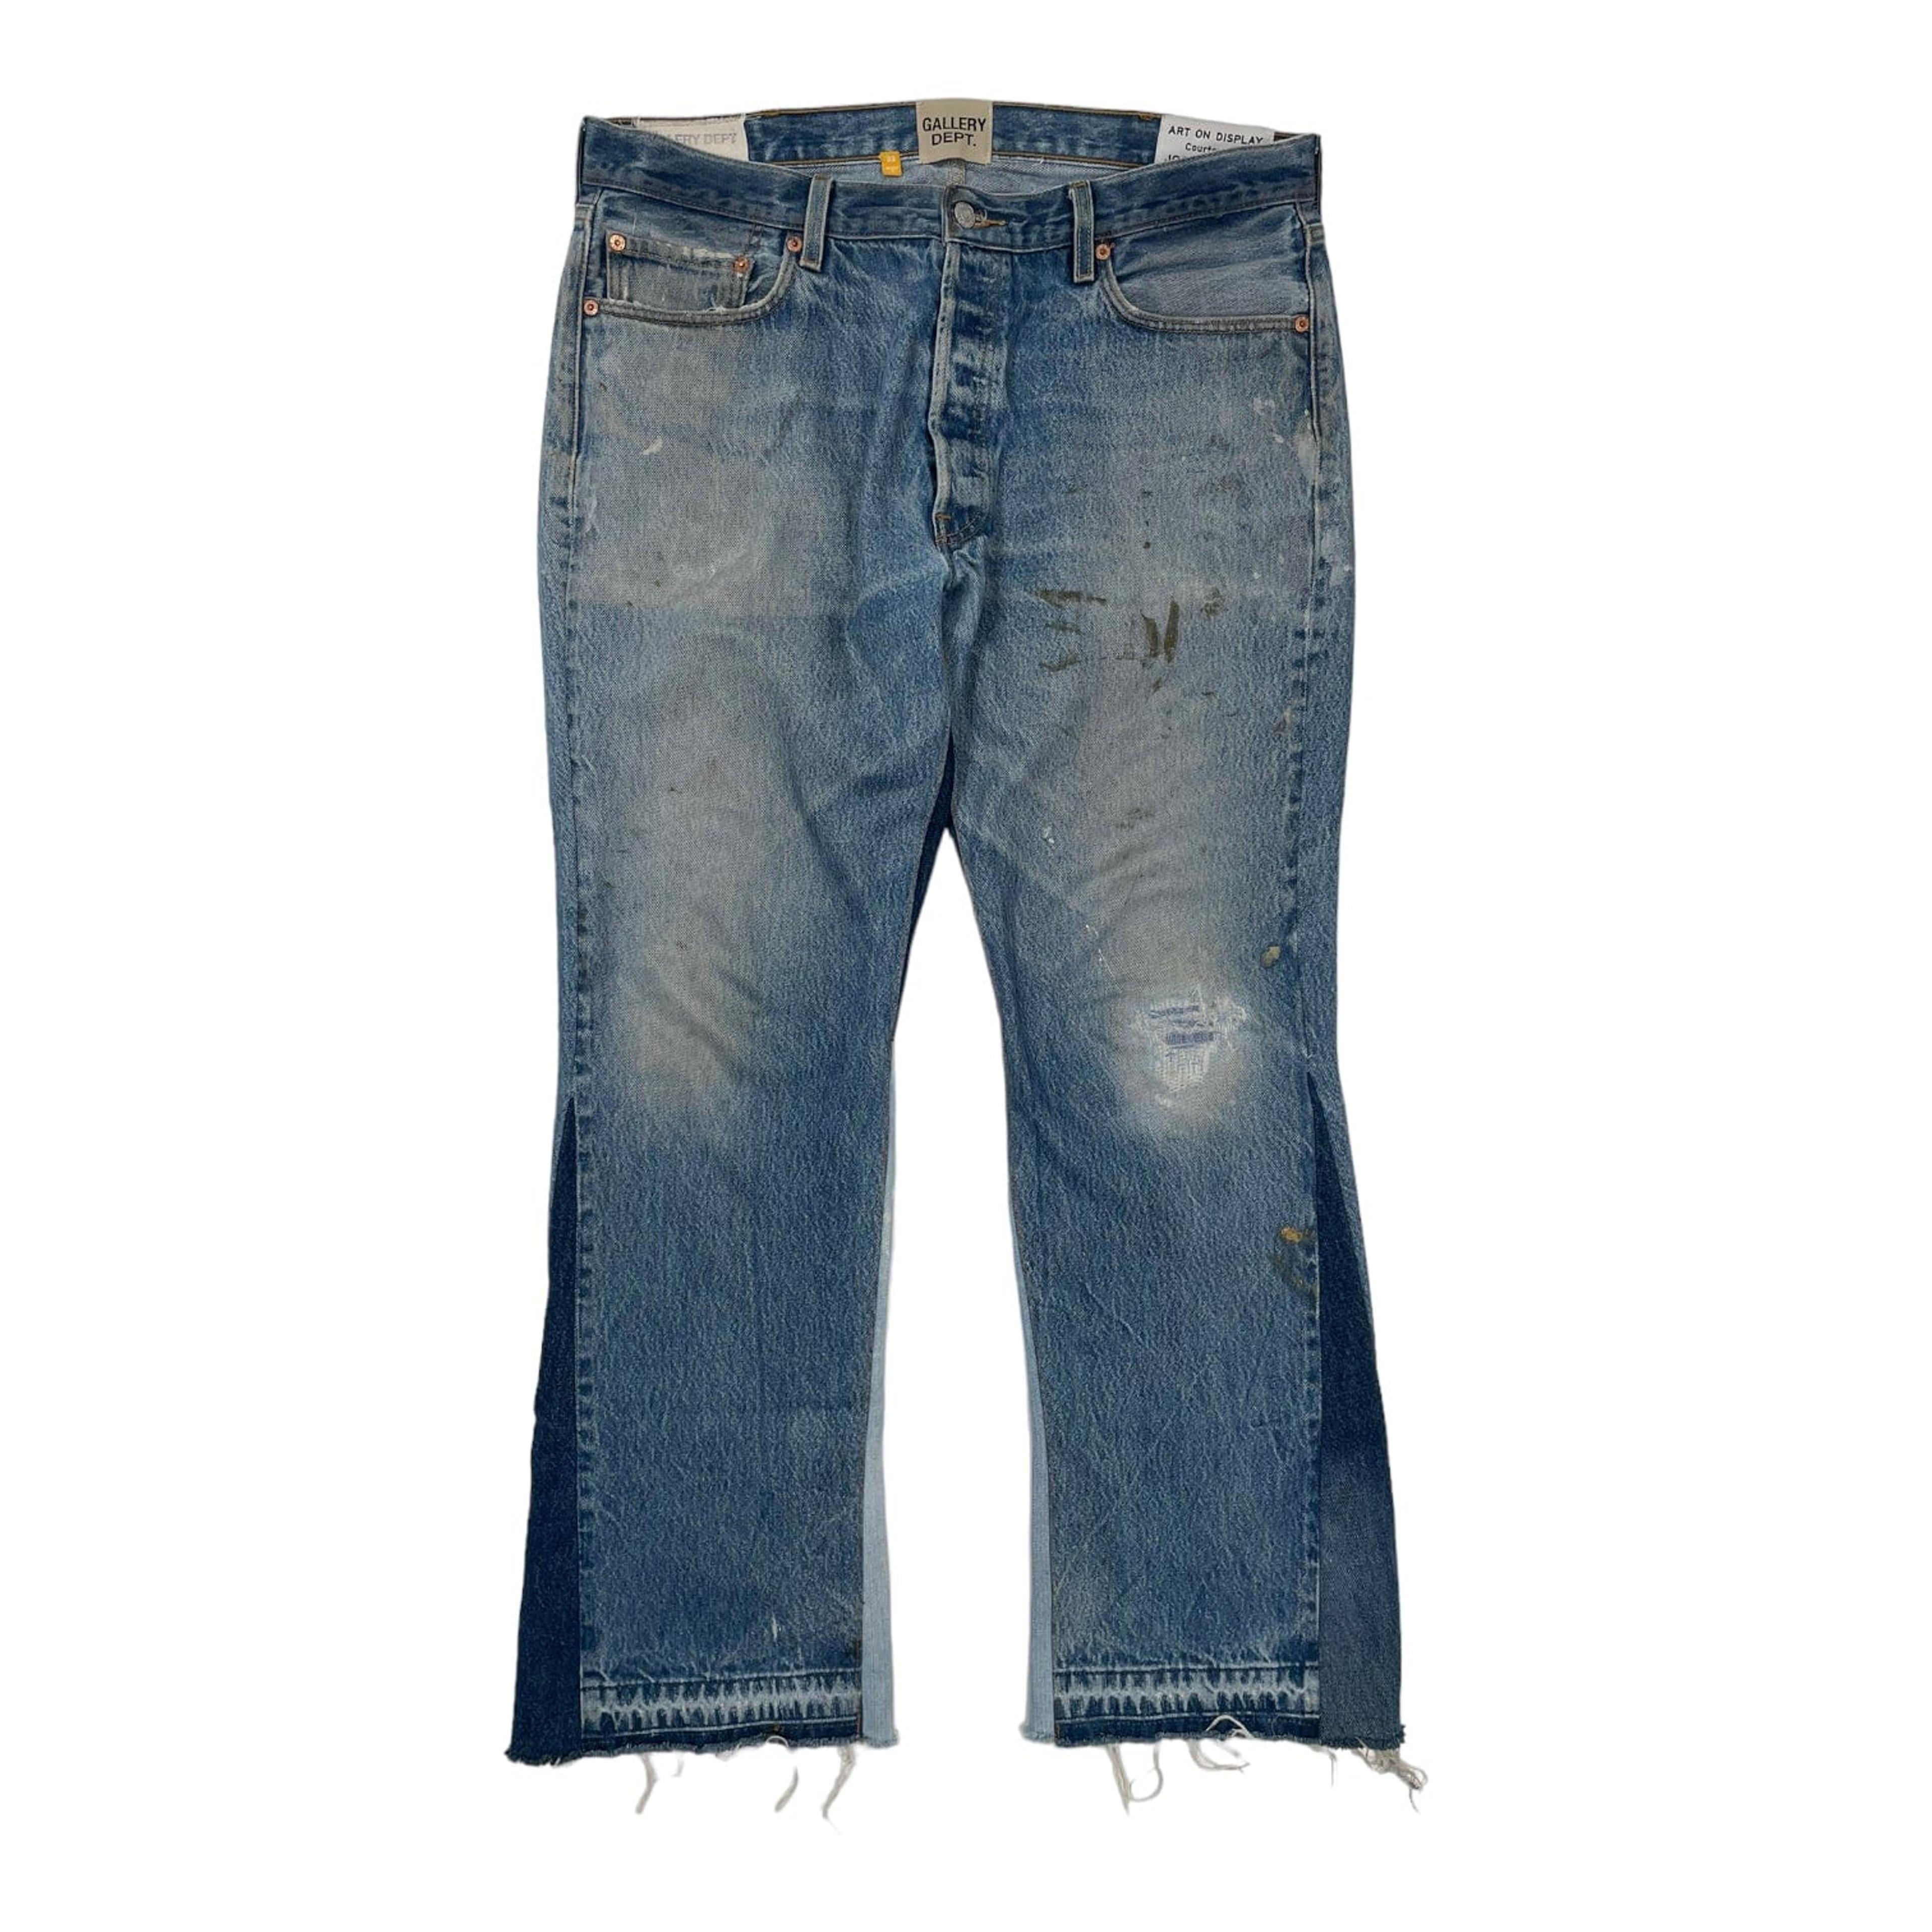 Gallery Department OG LA Flare Jeans Indigo Pre-Owned